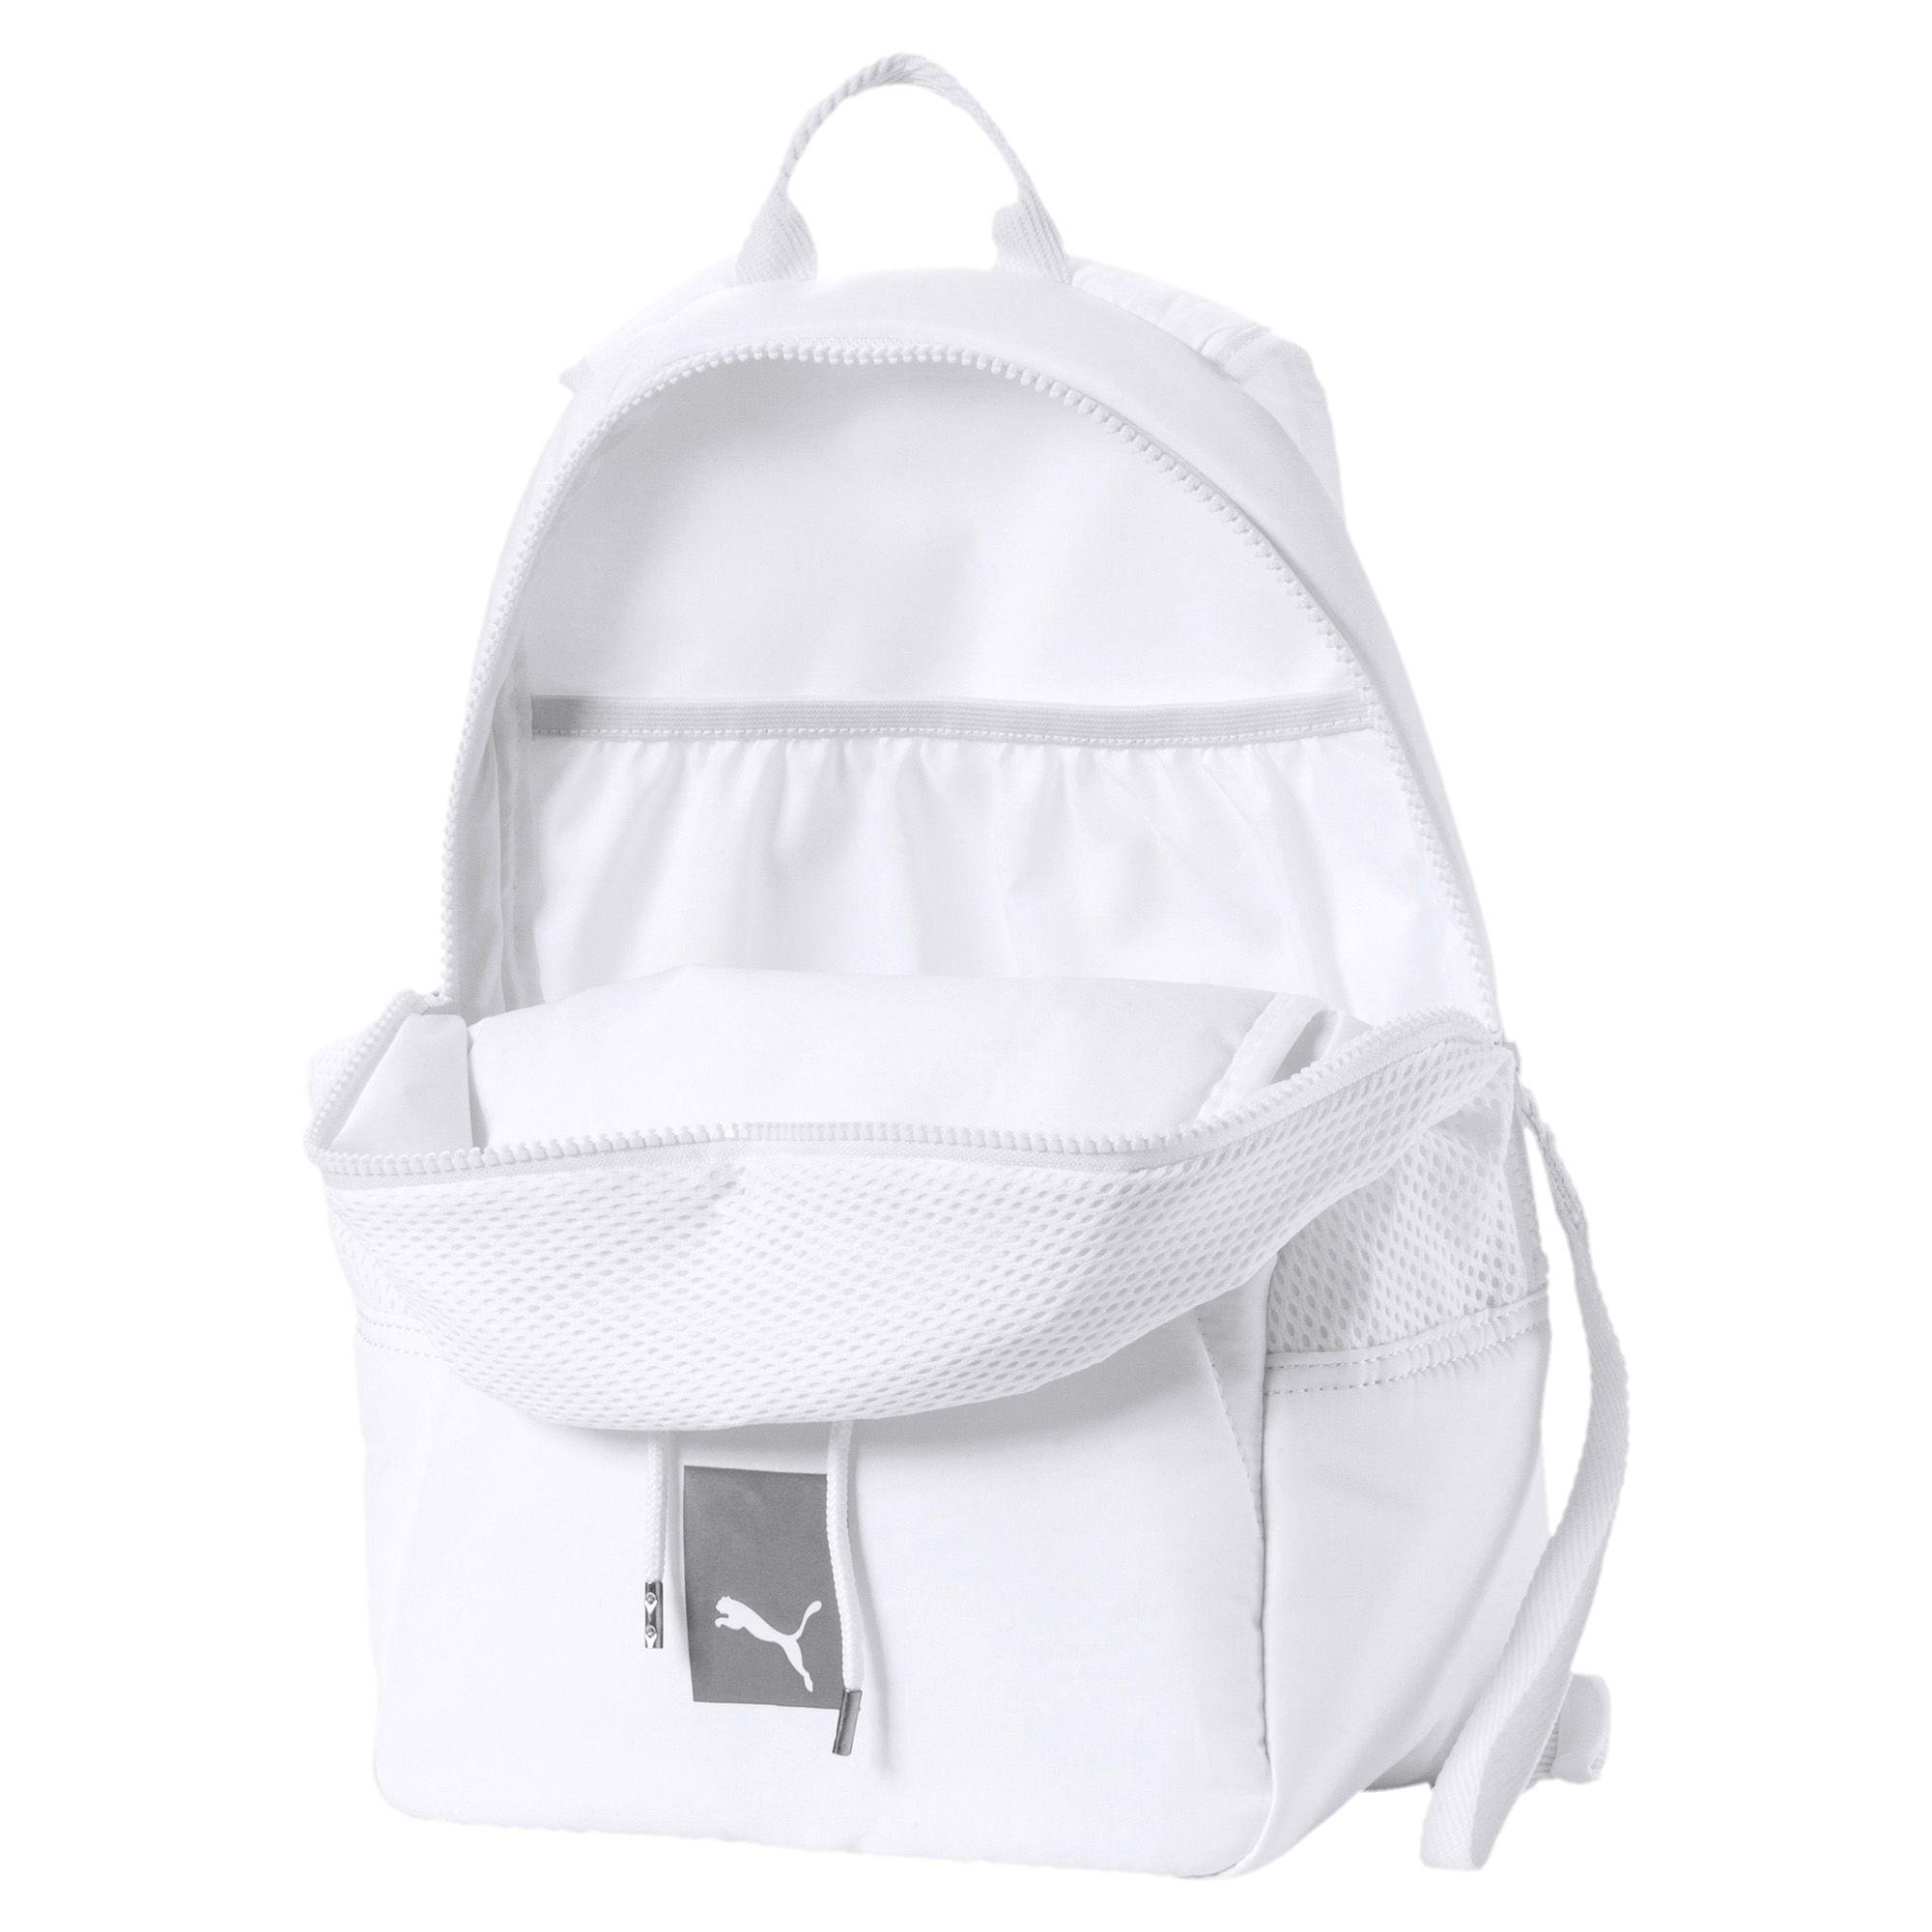 puma prime small backpack